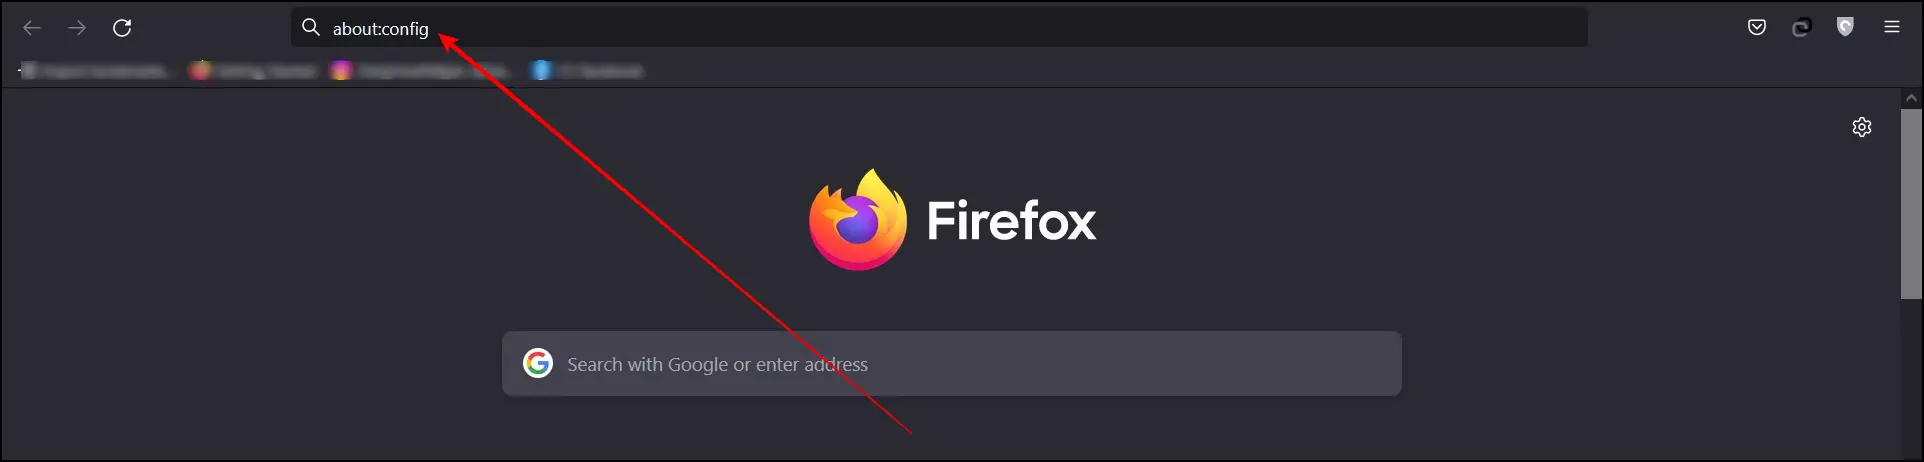 On Firefox